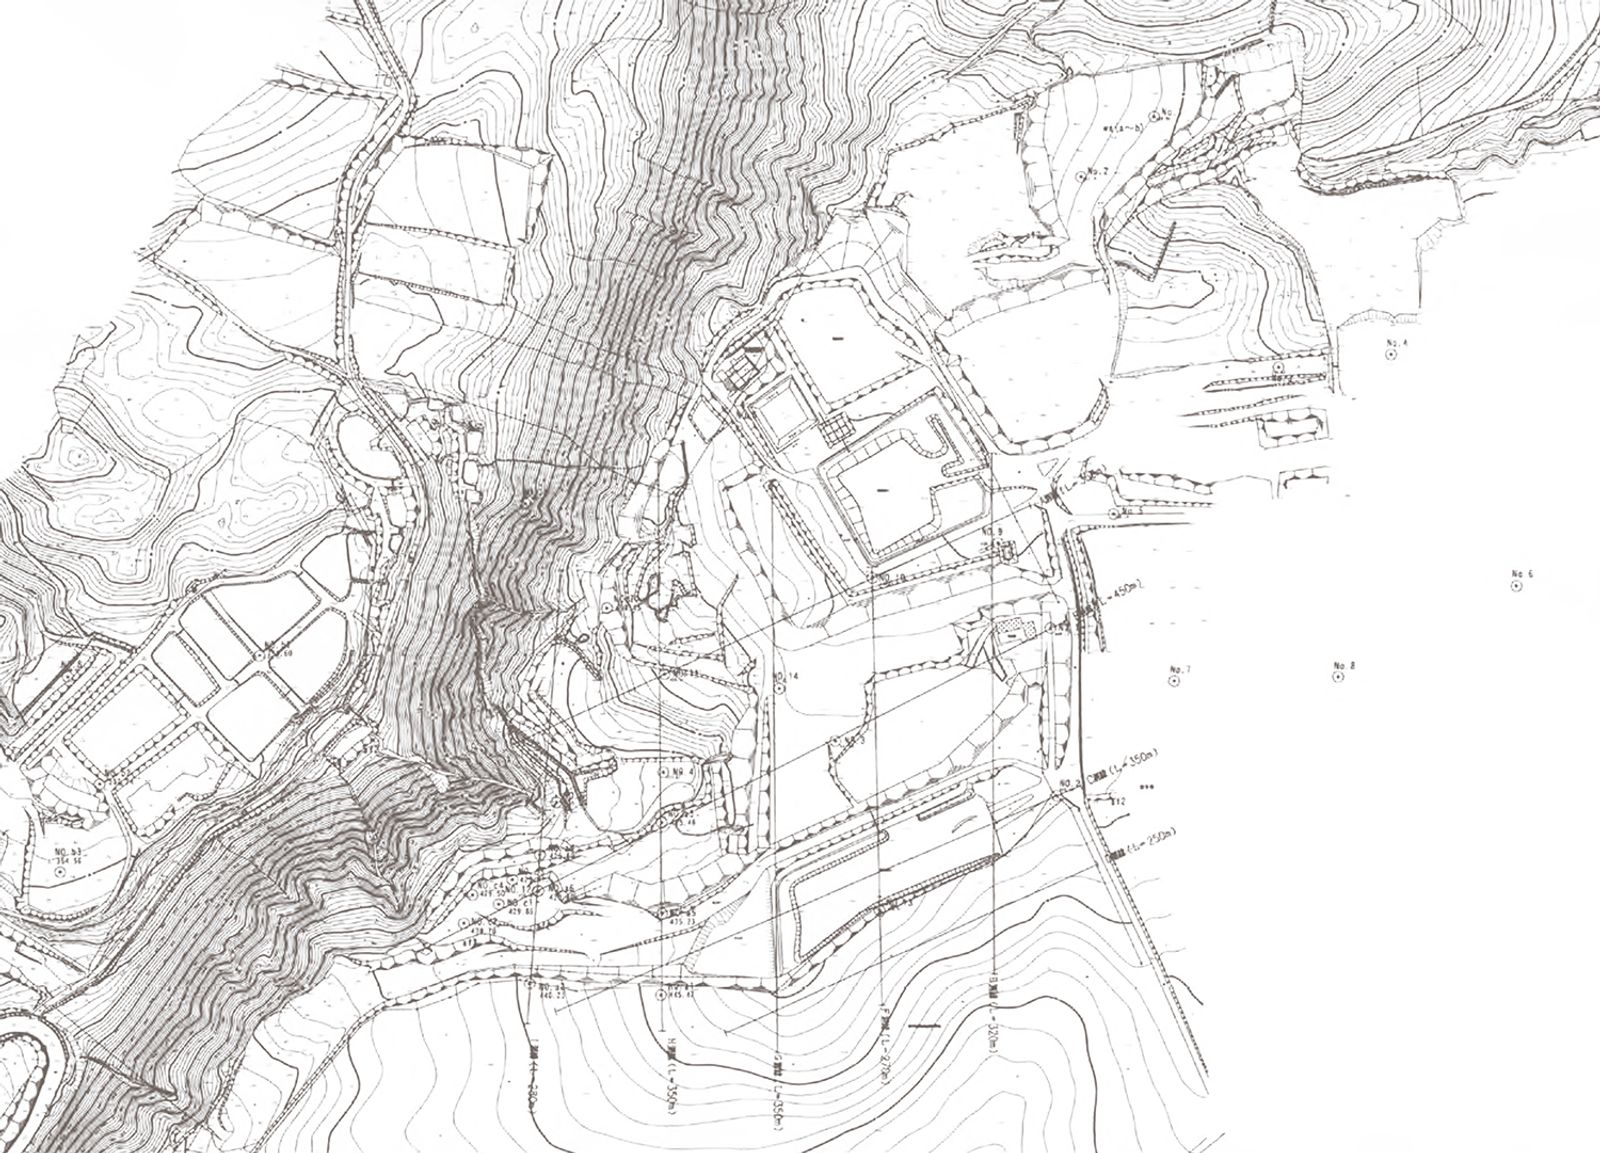 © Maki Hayashida - Archival Image, Map of Aomori-Iwate Prefectural Illegal Dumping Site